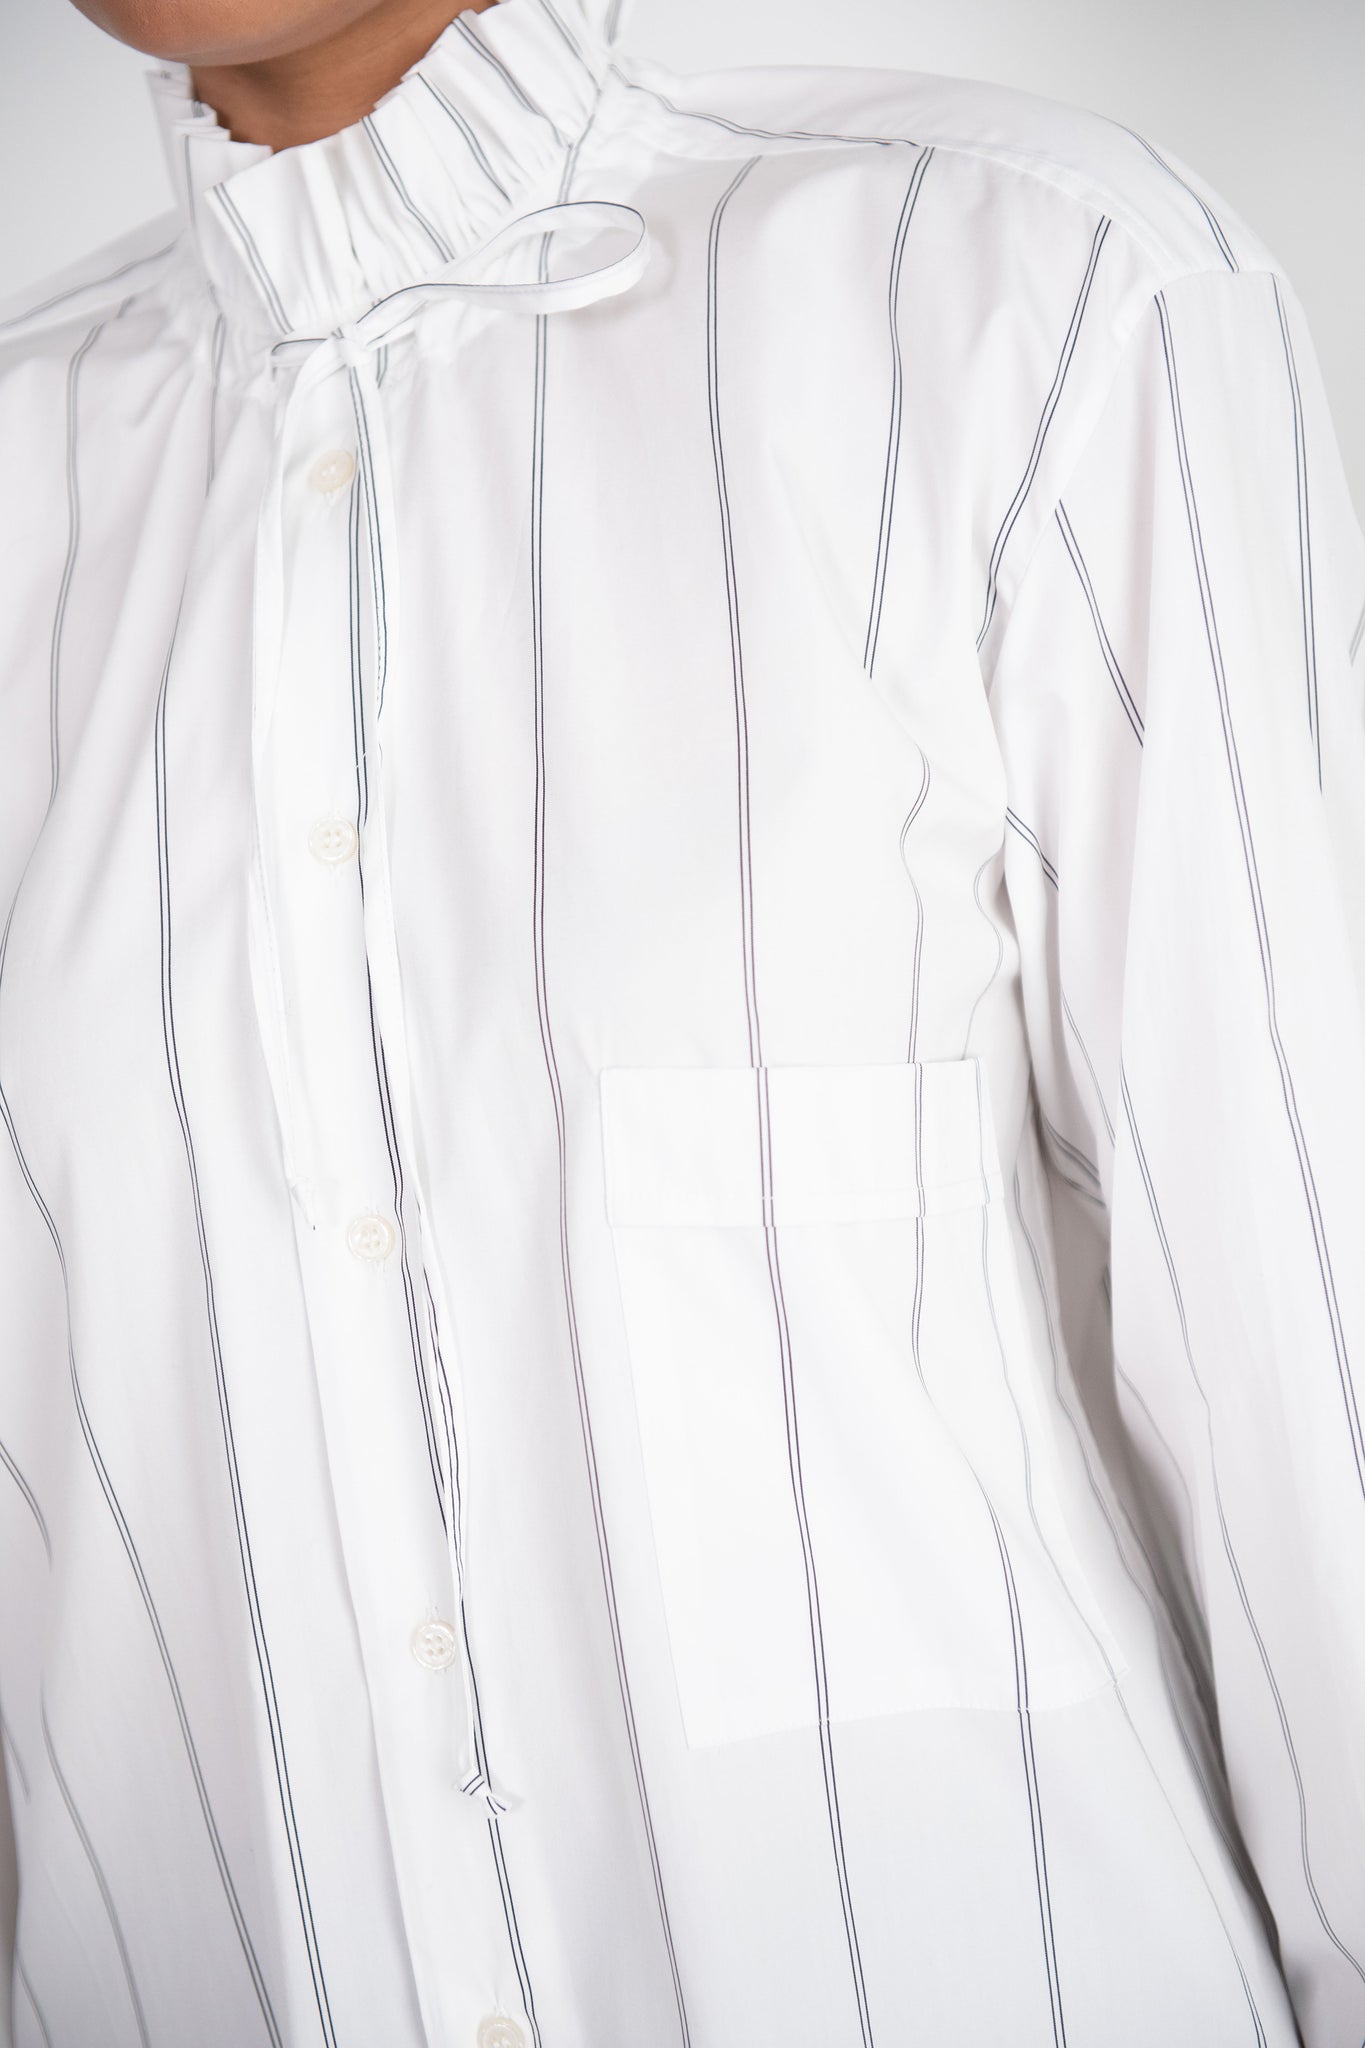 PLAN C - Ruffled Neck Striped Shirt, White